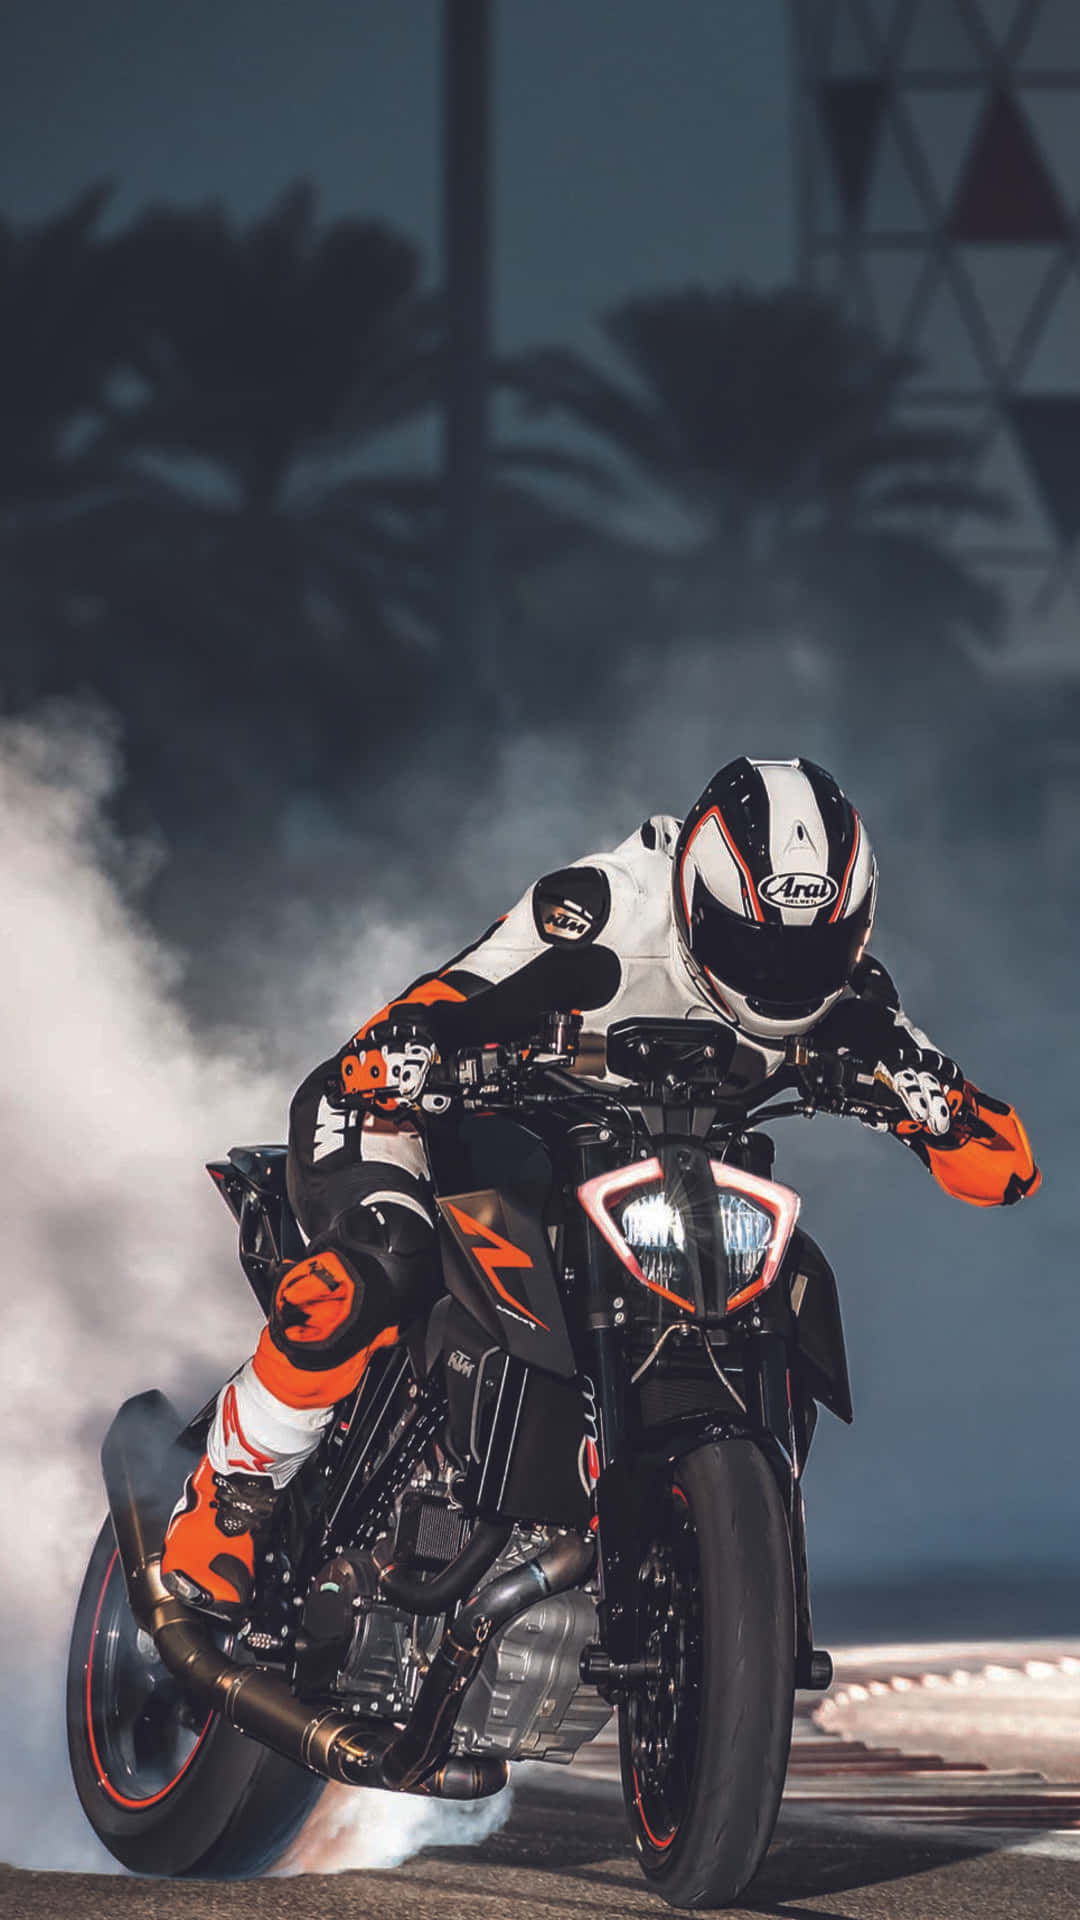 Adventurous Ride With Ktm Motorcycle Wallpaper